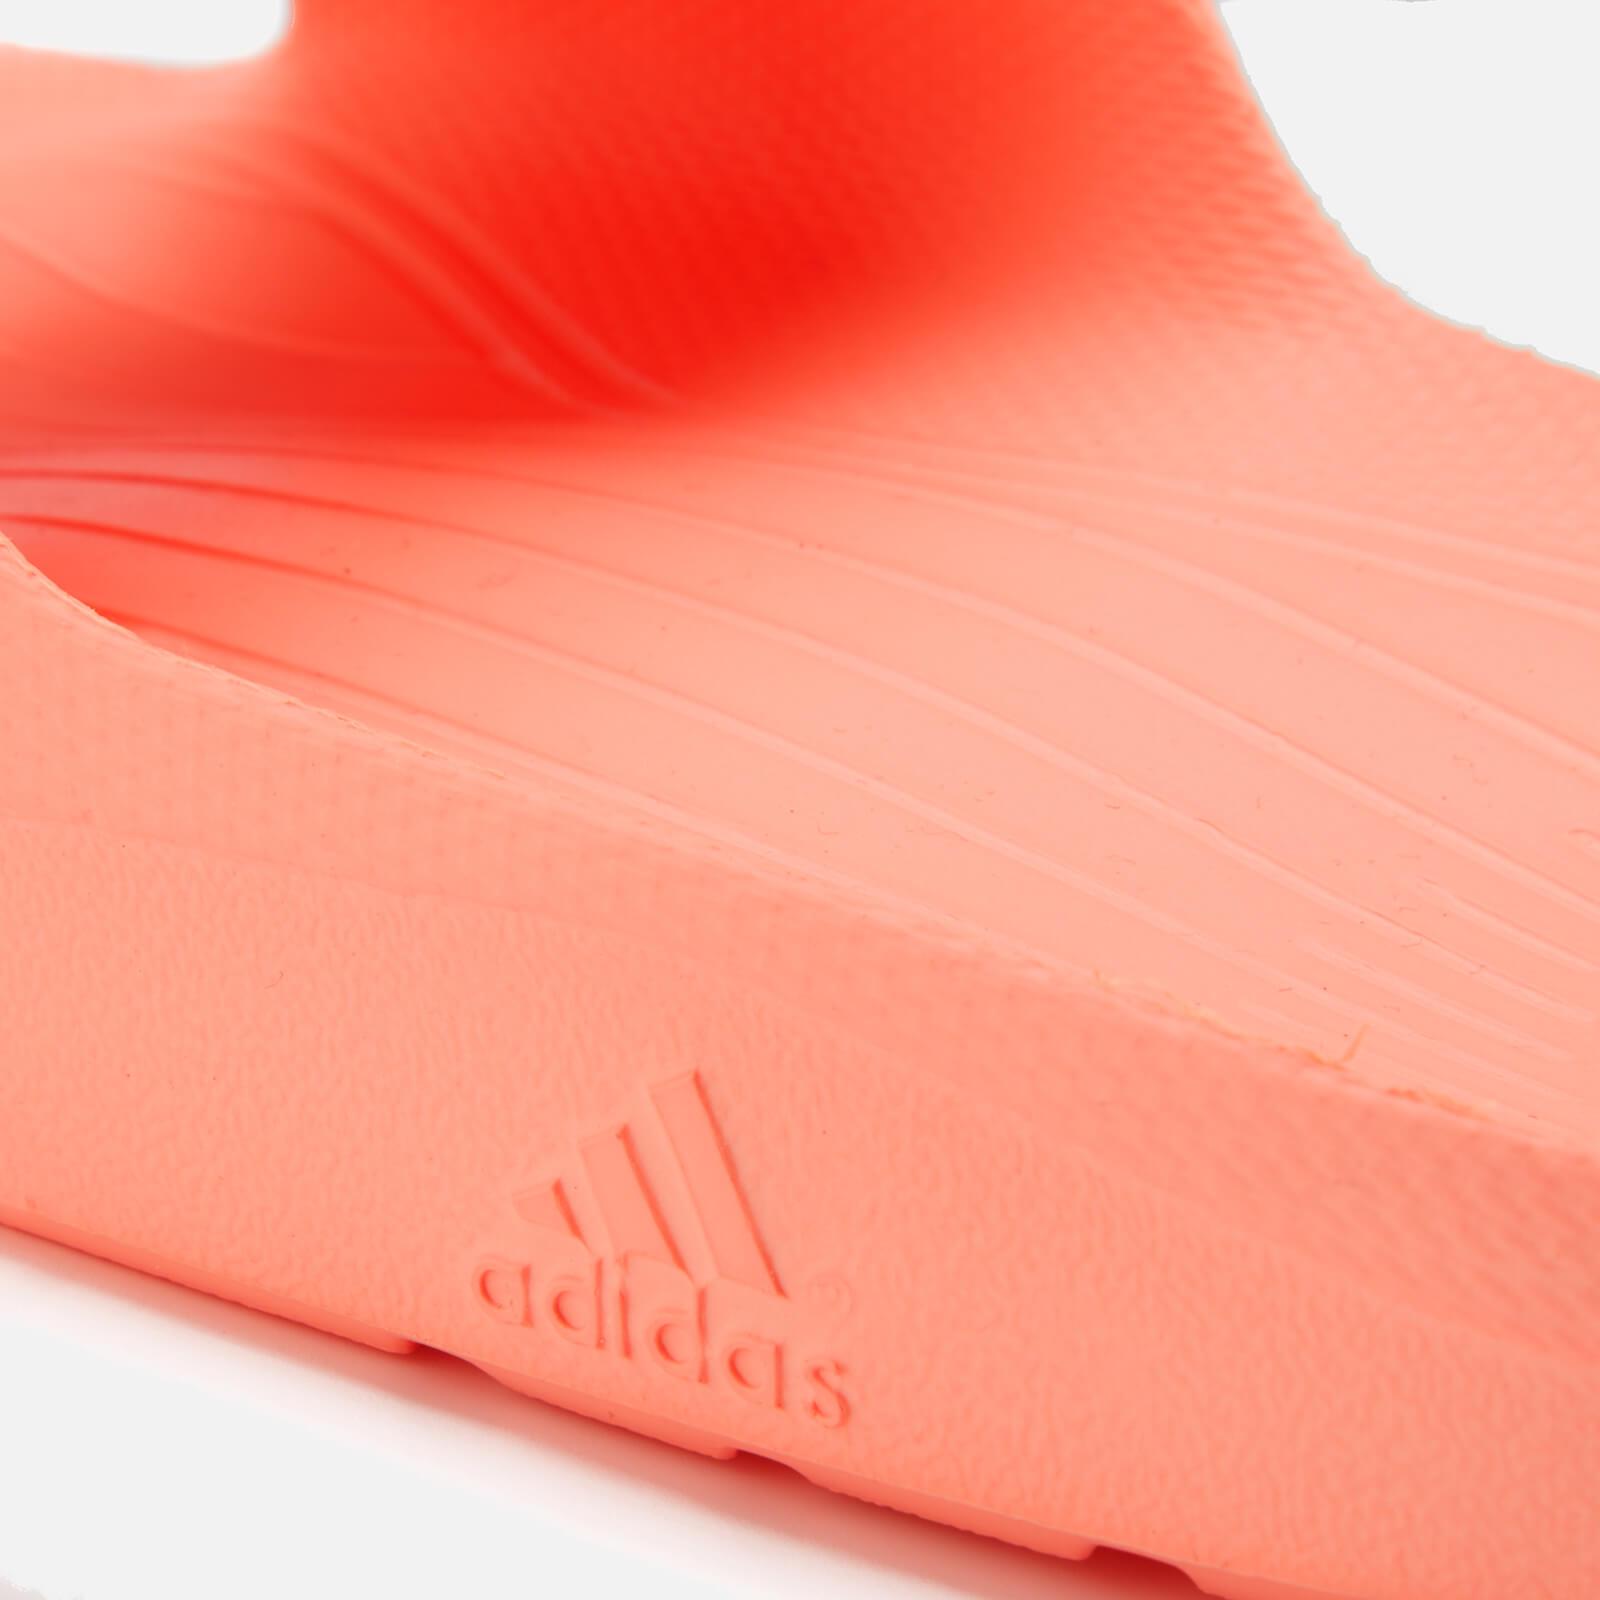 adidas Duramo Slide Sandals in Orange - Lyst